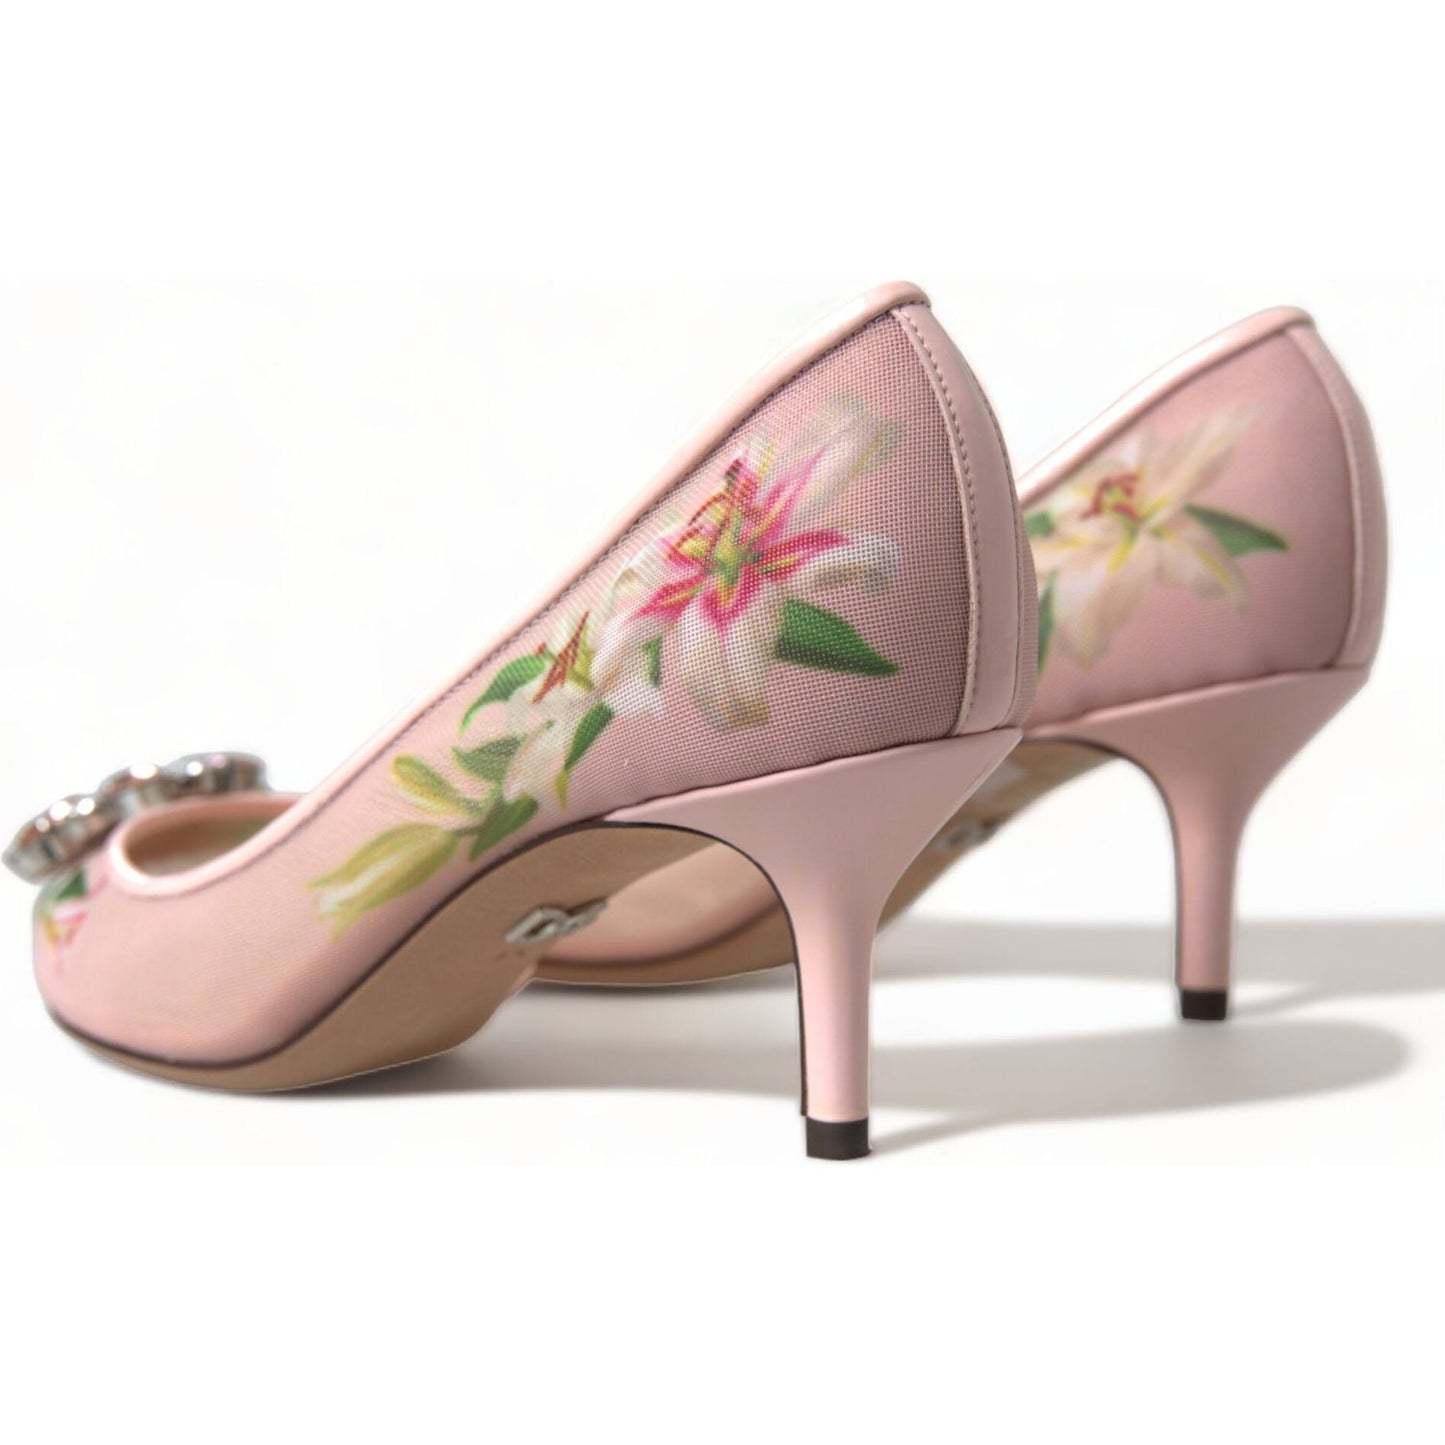 Dolce & Gabbana Elegant Pink Floral Crystal Pumps pink-floral-crystal-heels-pumps-shoes 465A9562-bg-scaled-6aaa83c4-413.jpg